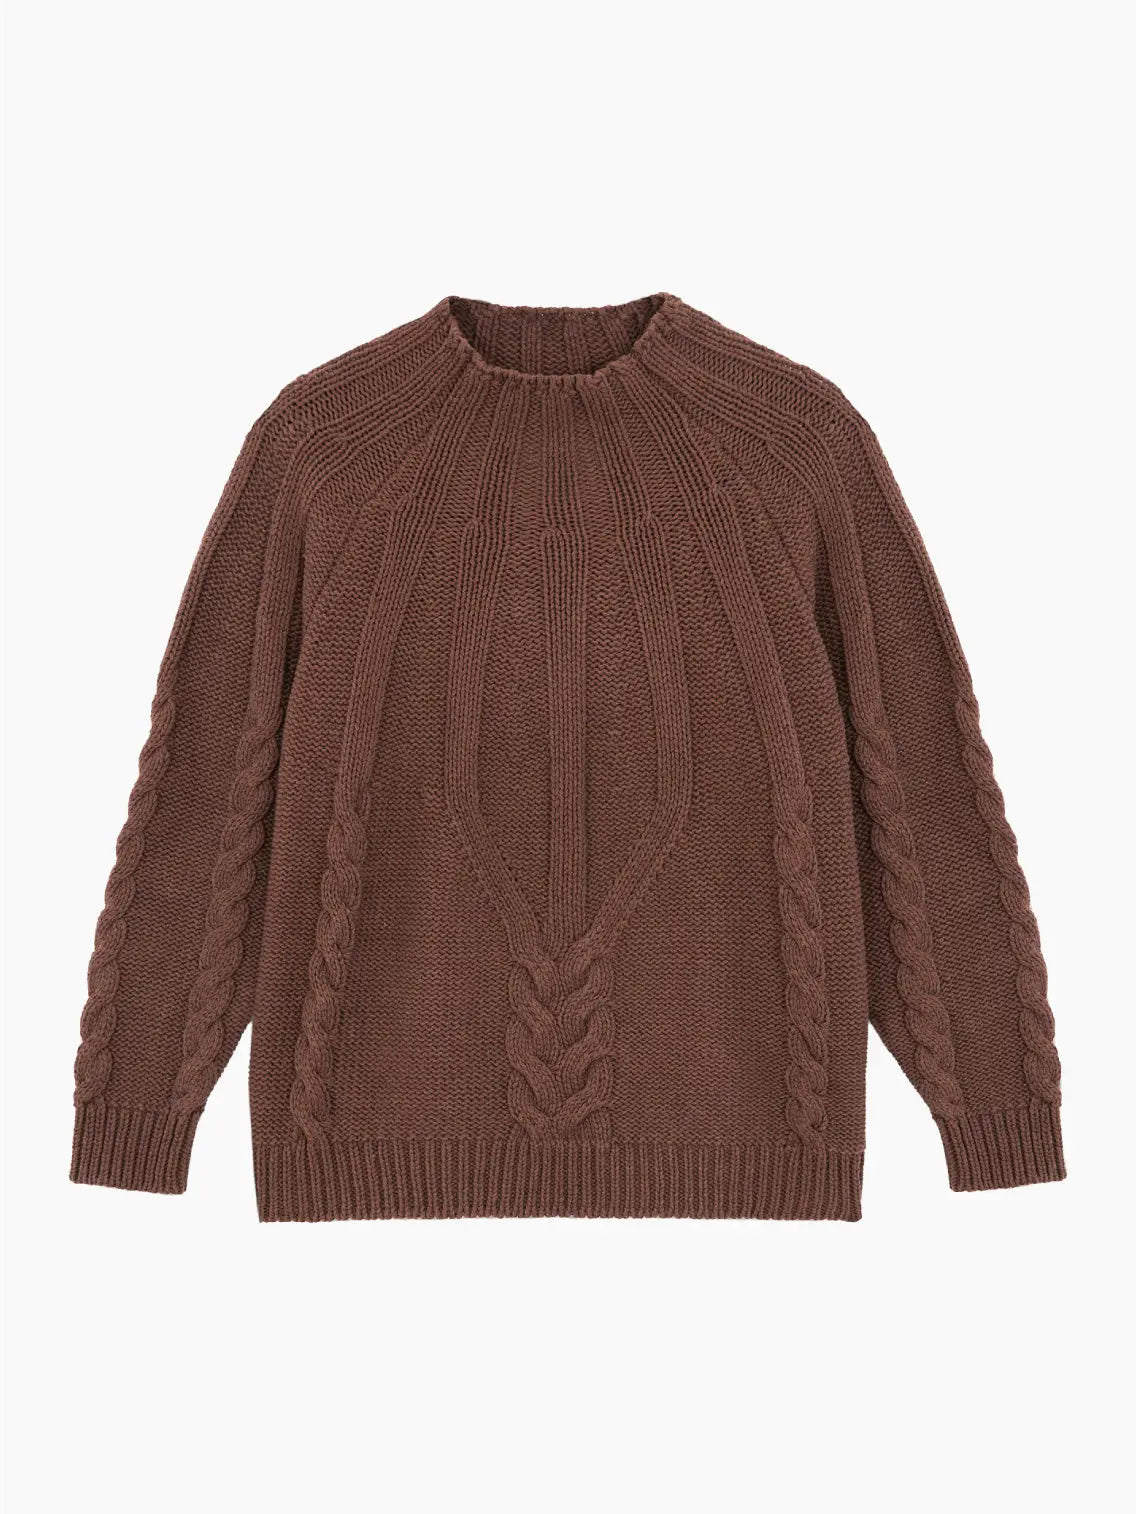 Cotton Cable Sweater Madera Cordera